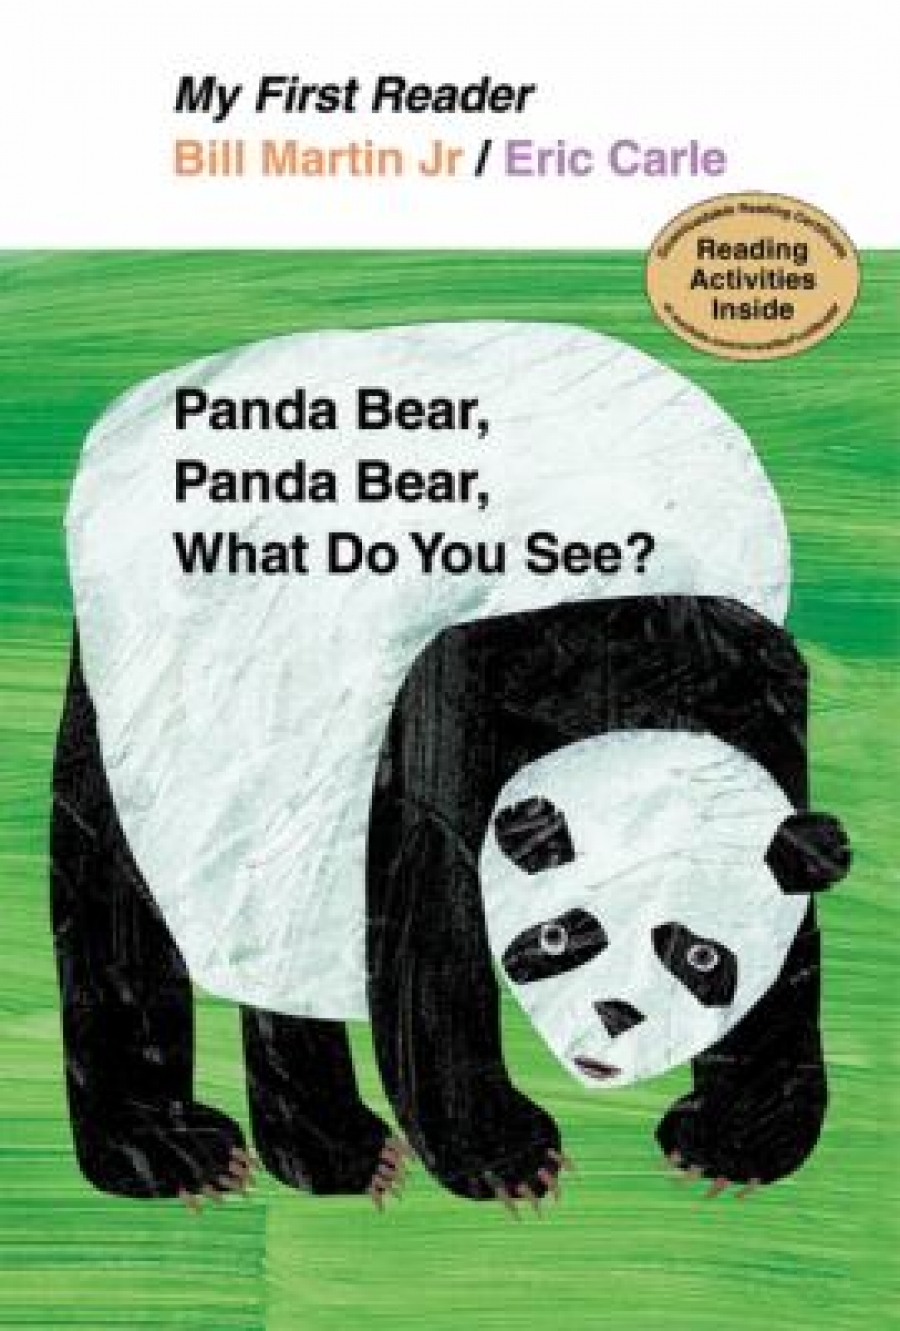 Carle, Eric; Martin, Bill Jr. Panda Bear, Panda Bear, What Do You See?   My First Reader 